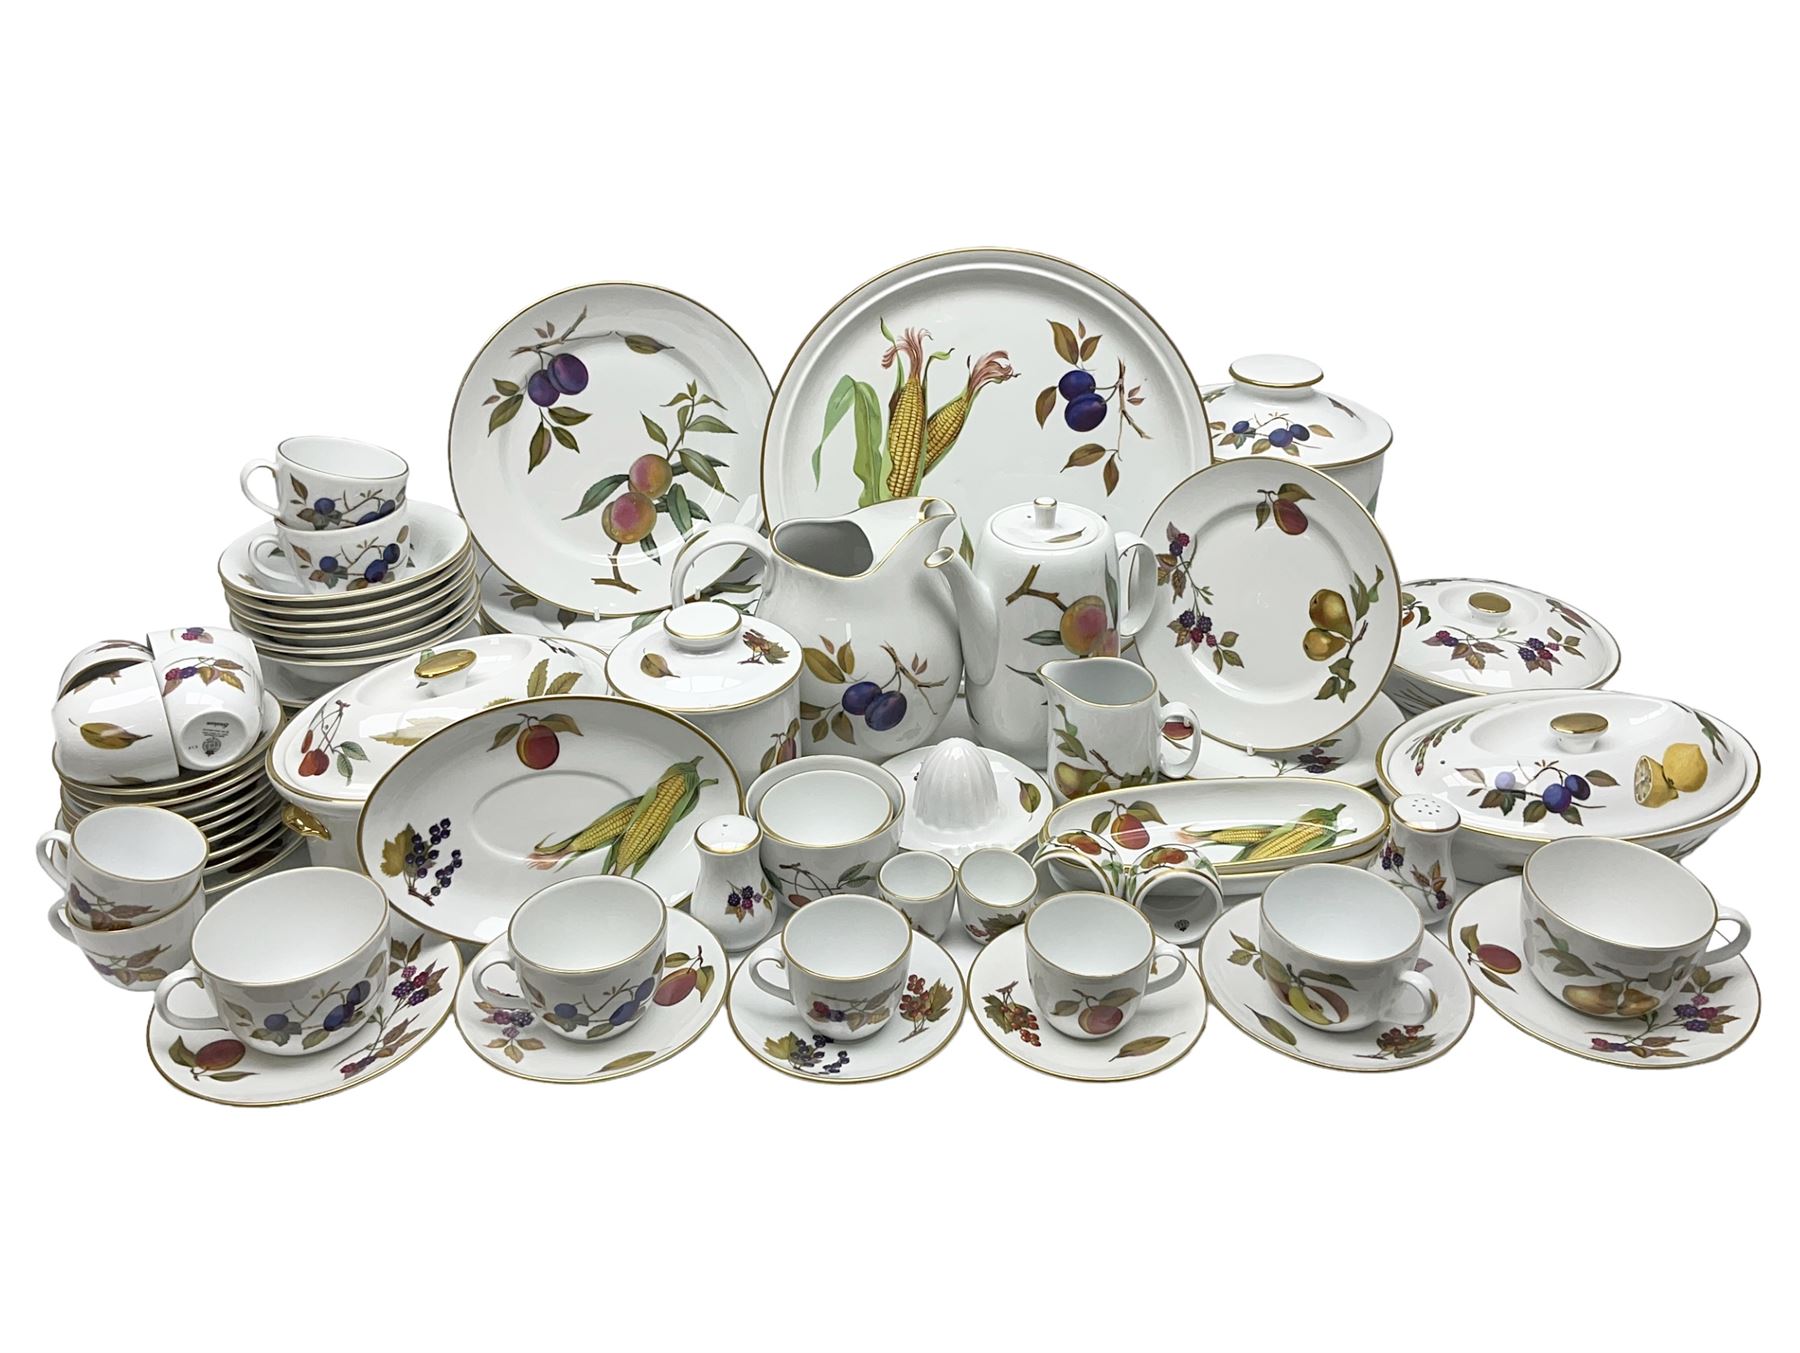 Royal Worcester Evesham pattern tea and dinner wares